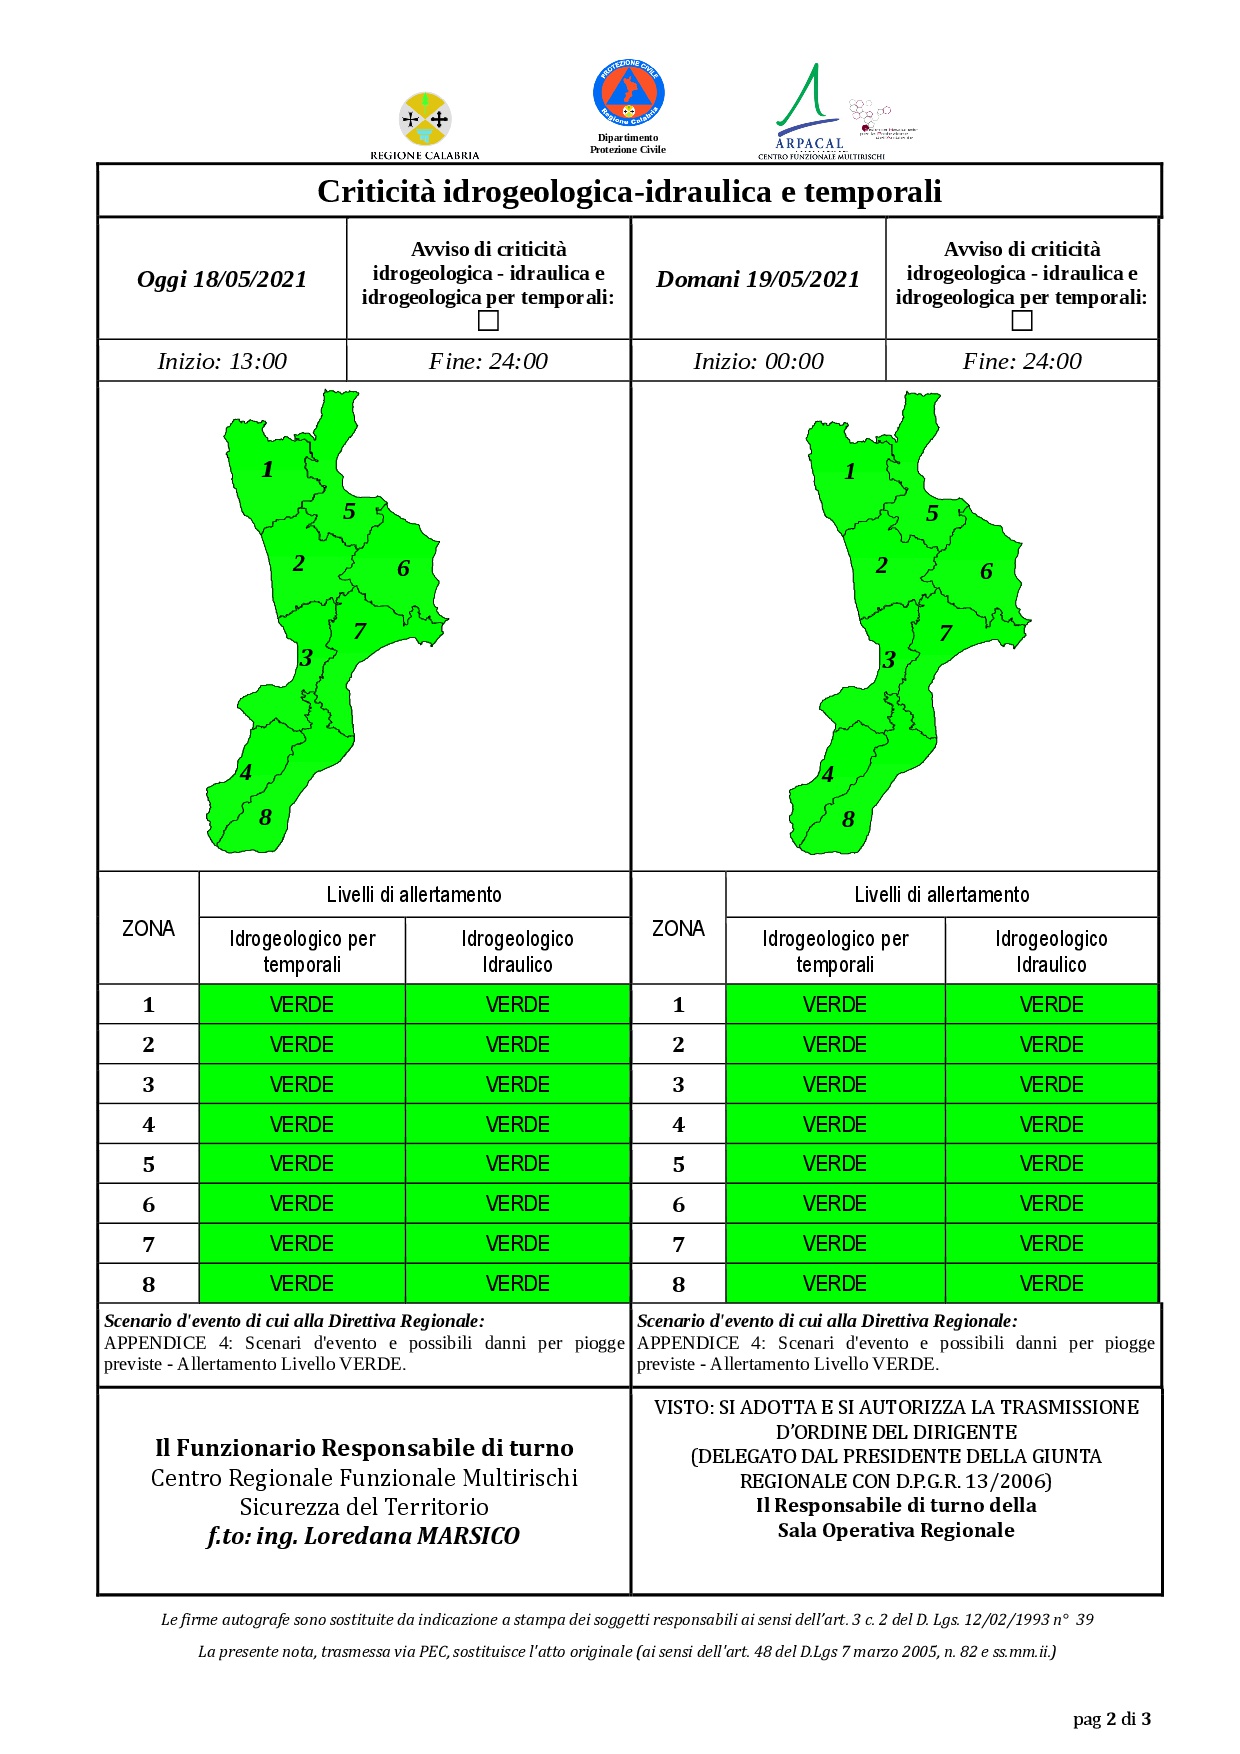 Criticità idrogeologica-idraulica e temporali in Calabria 18-05-2021